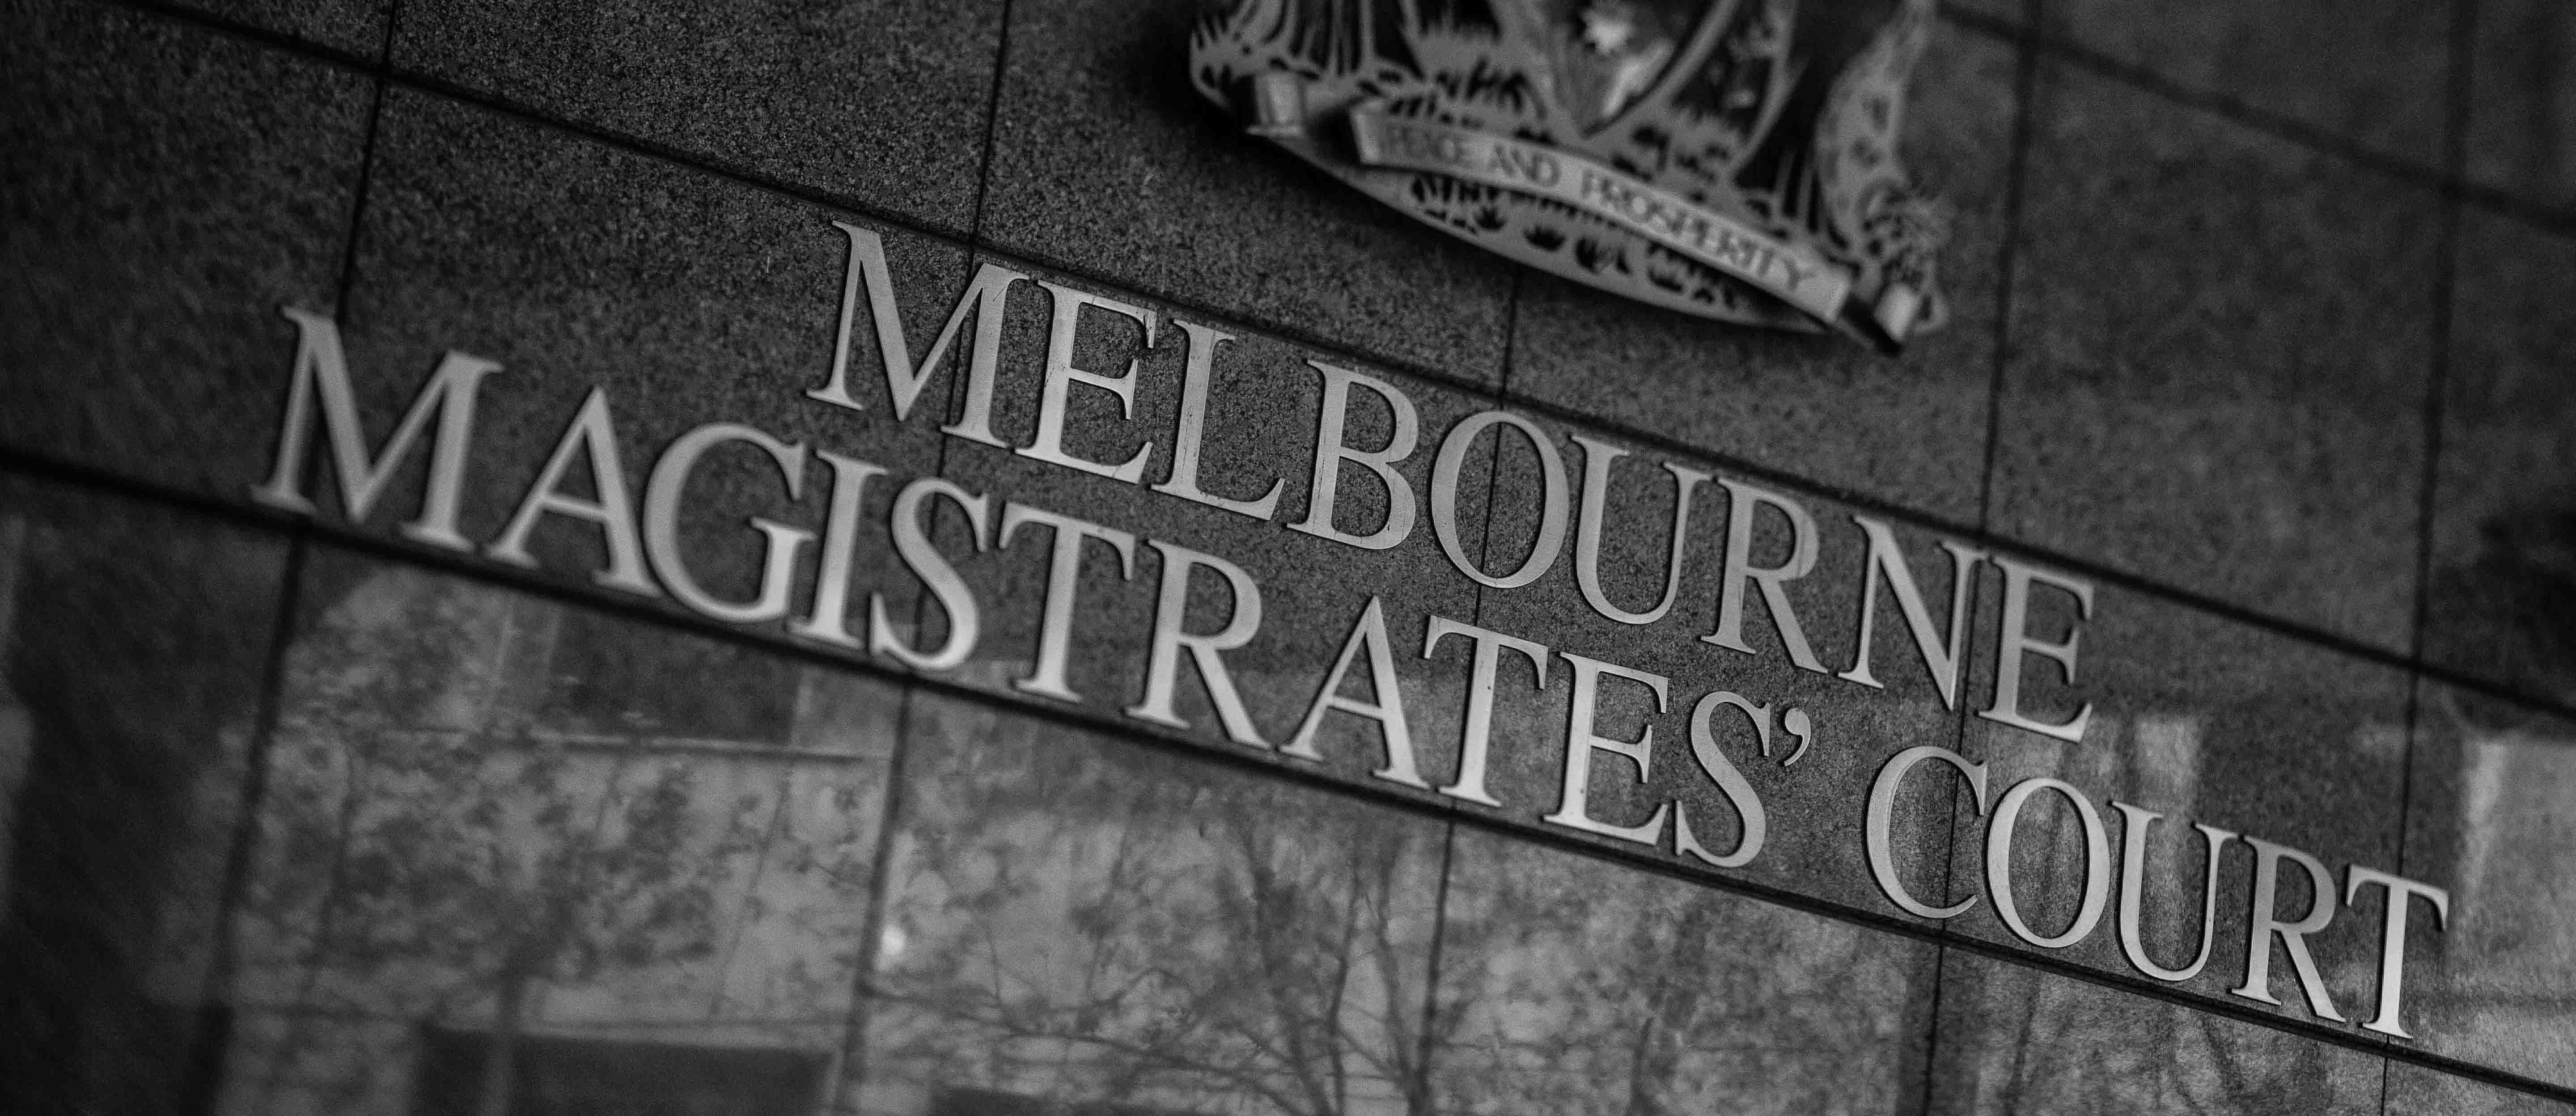 Melbourne Magistrates' Court